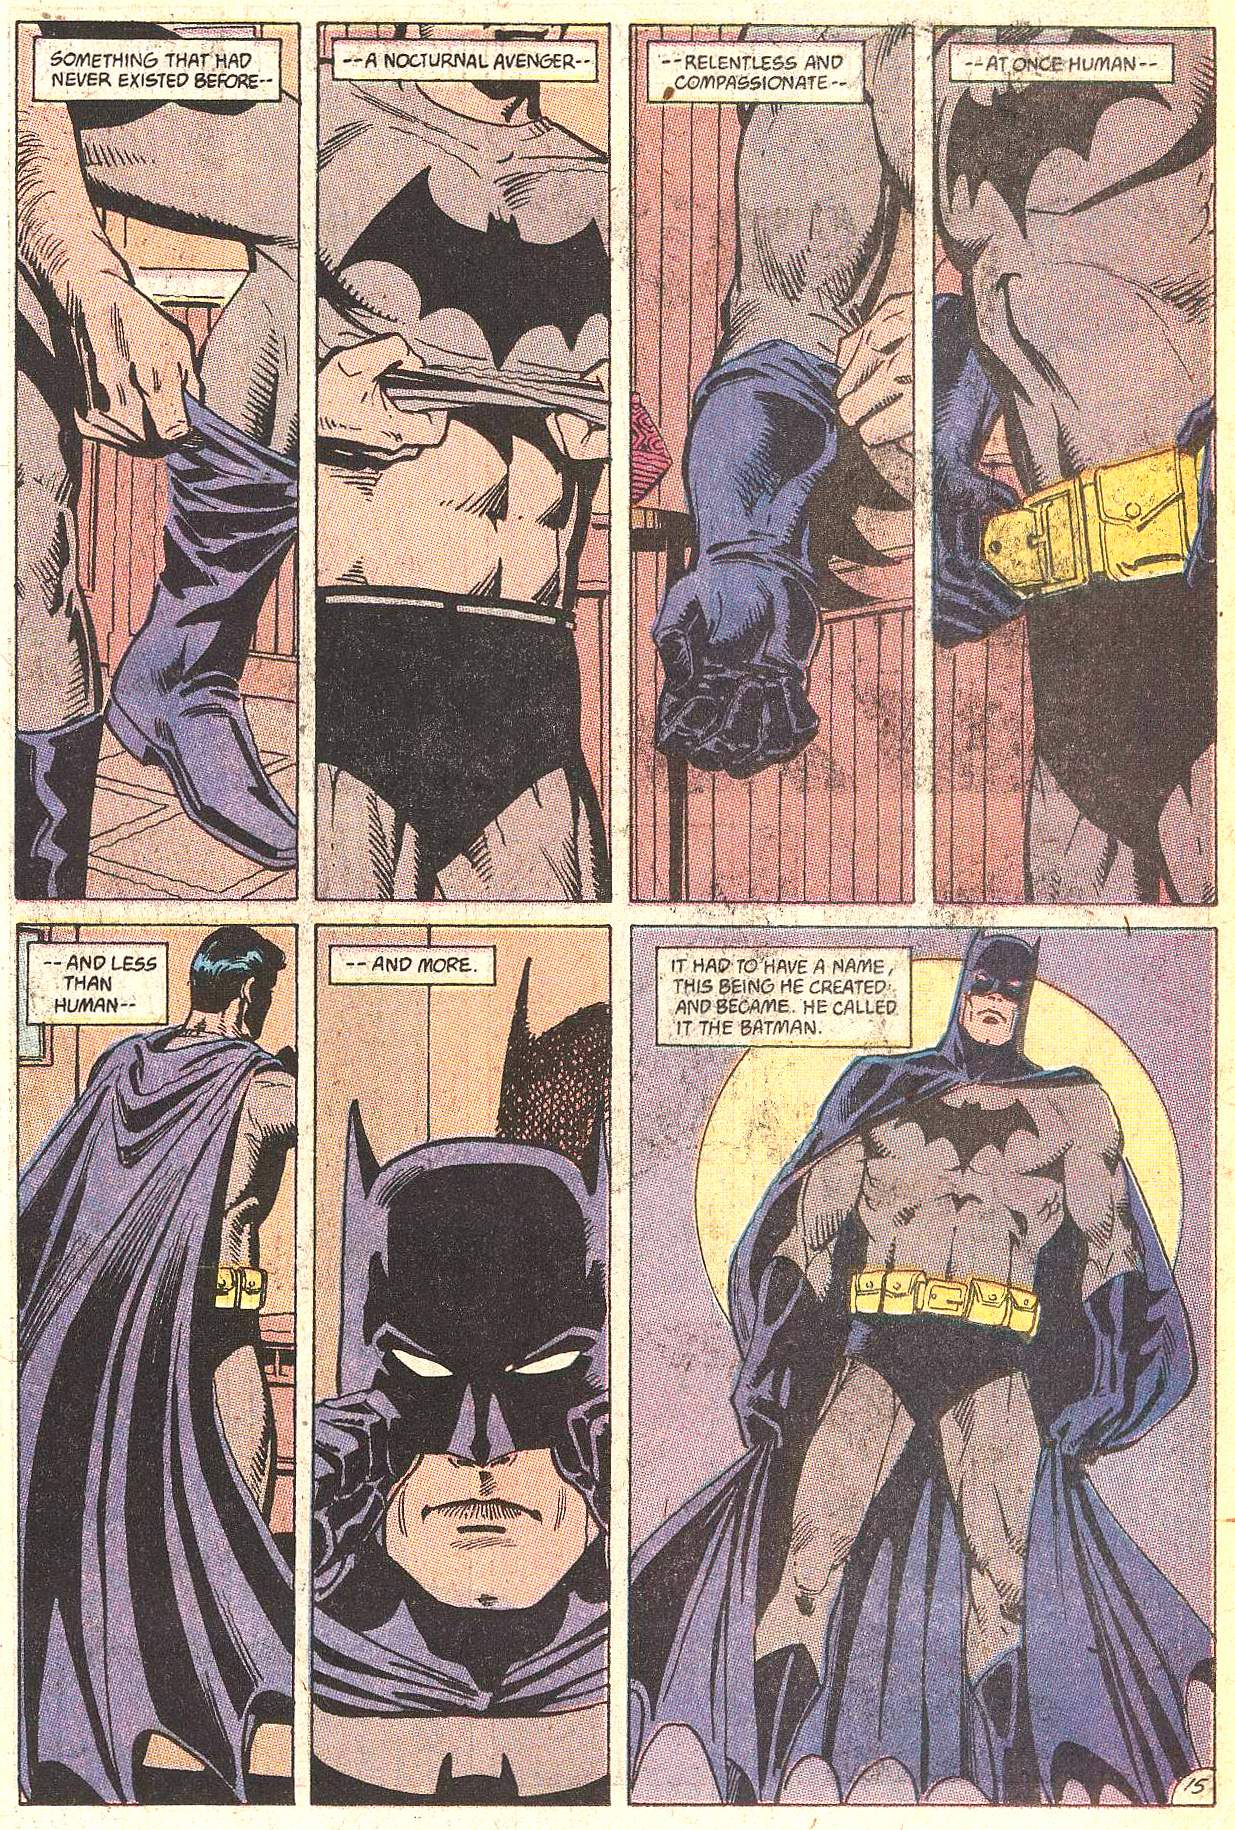 Psychology of Bruce Wayne RCO022